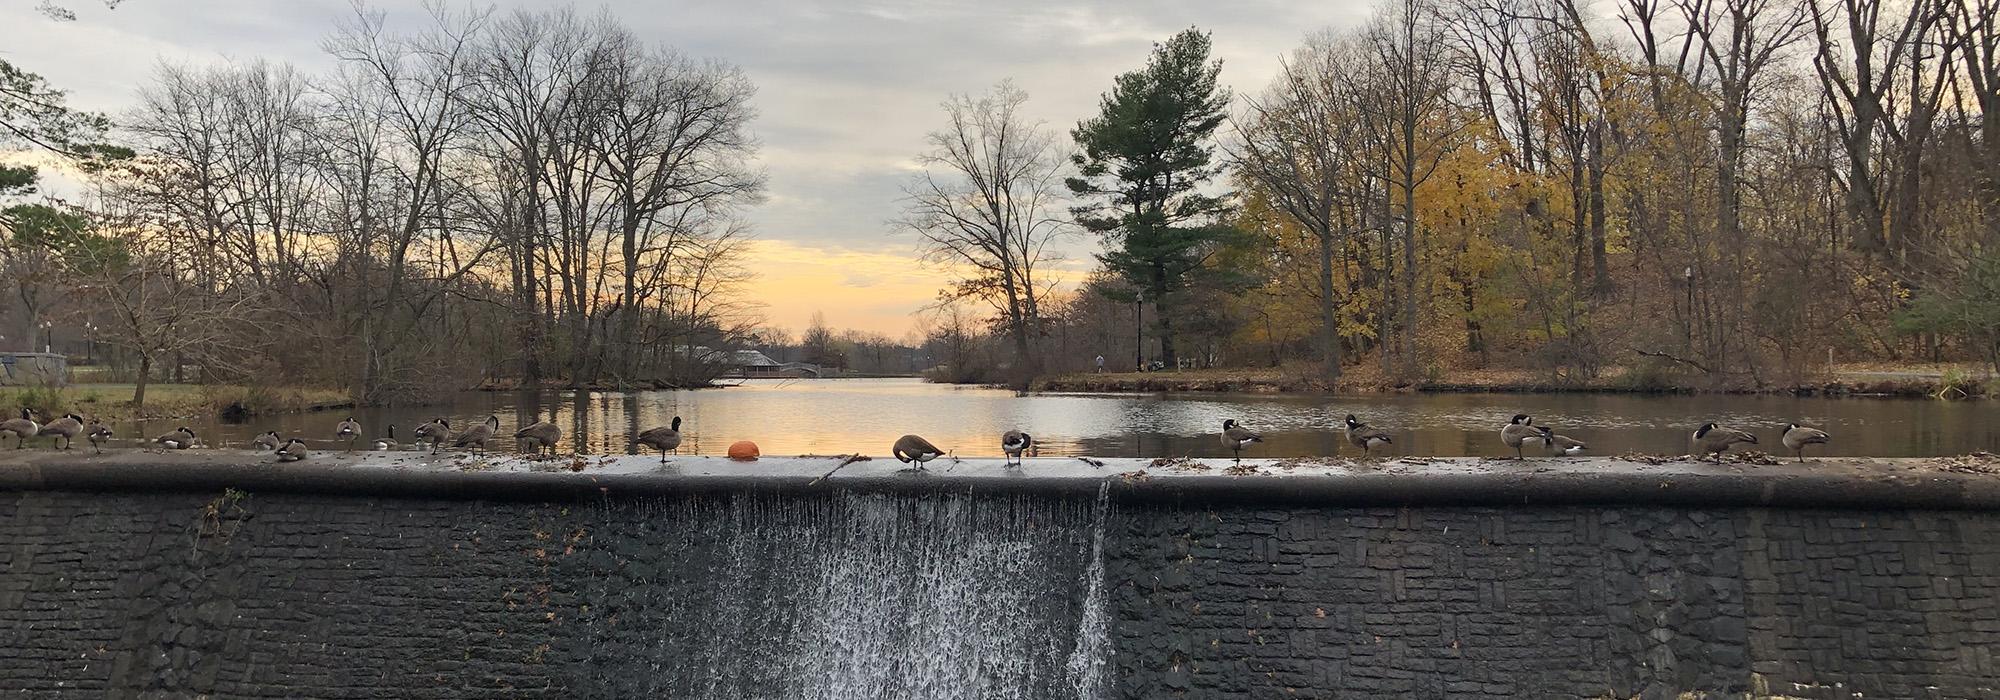 Verona Lake Park, Essex County, NJ